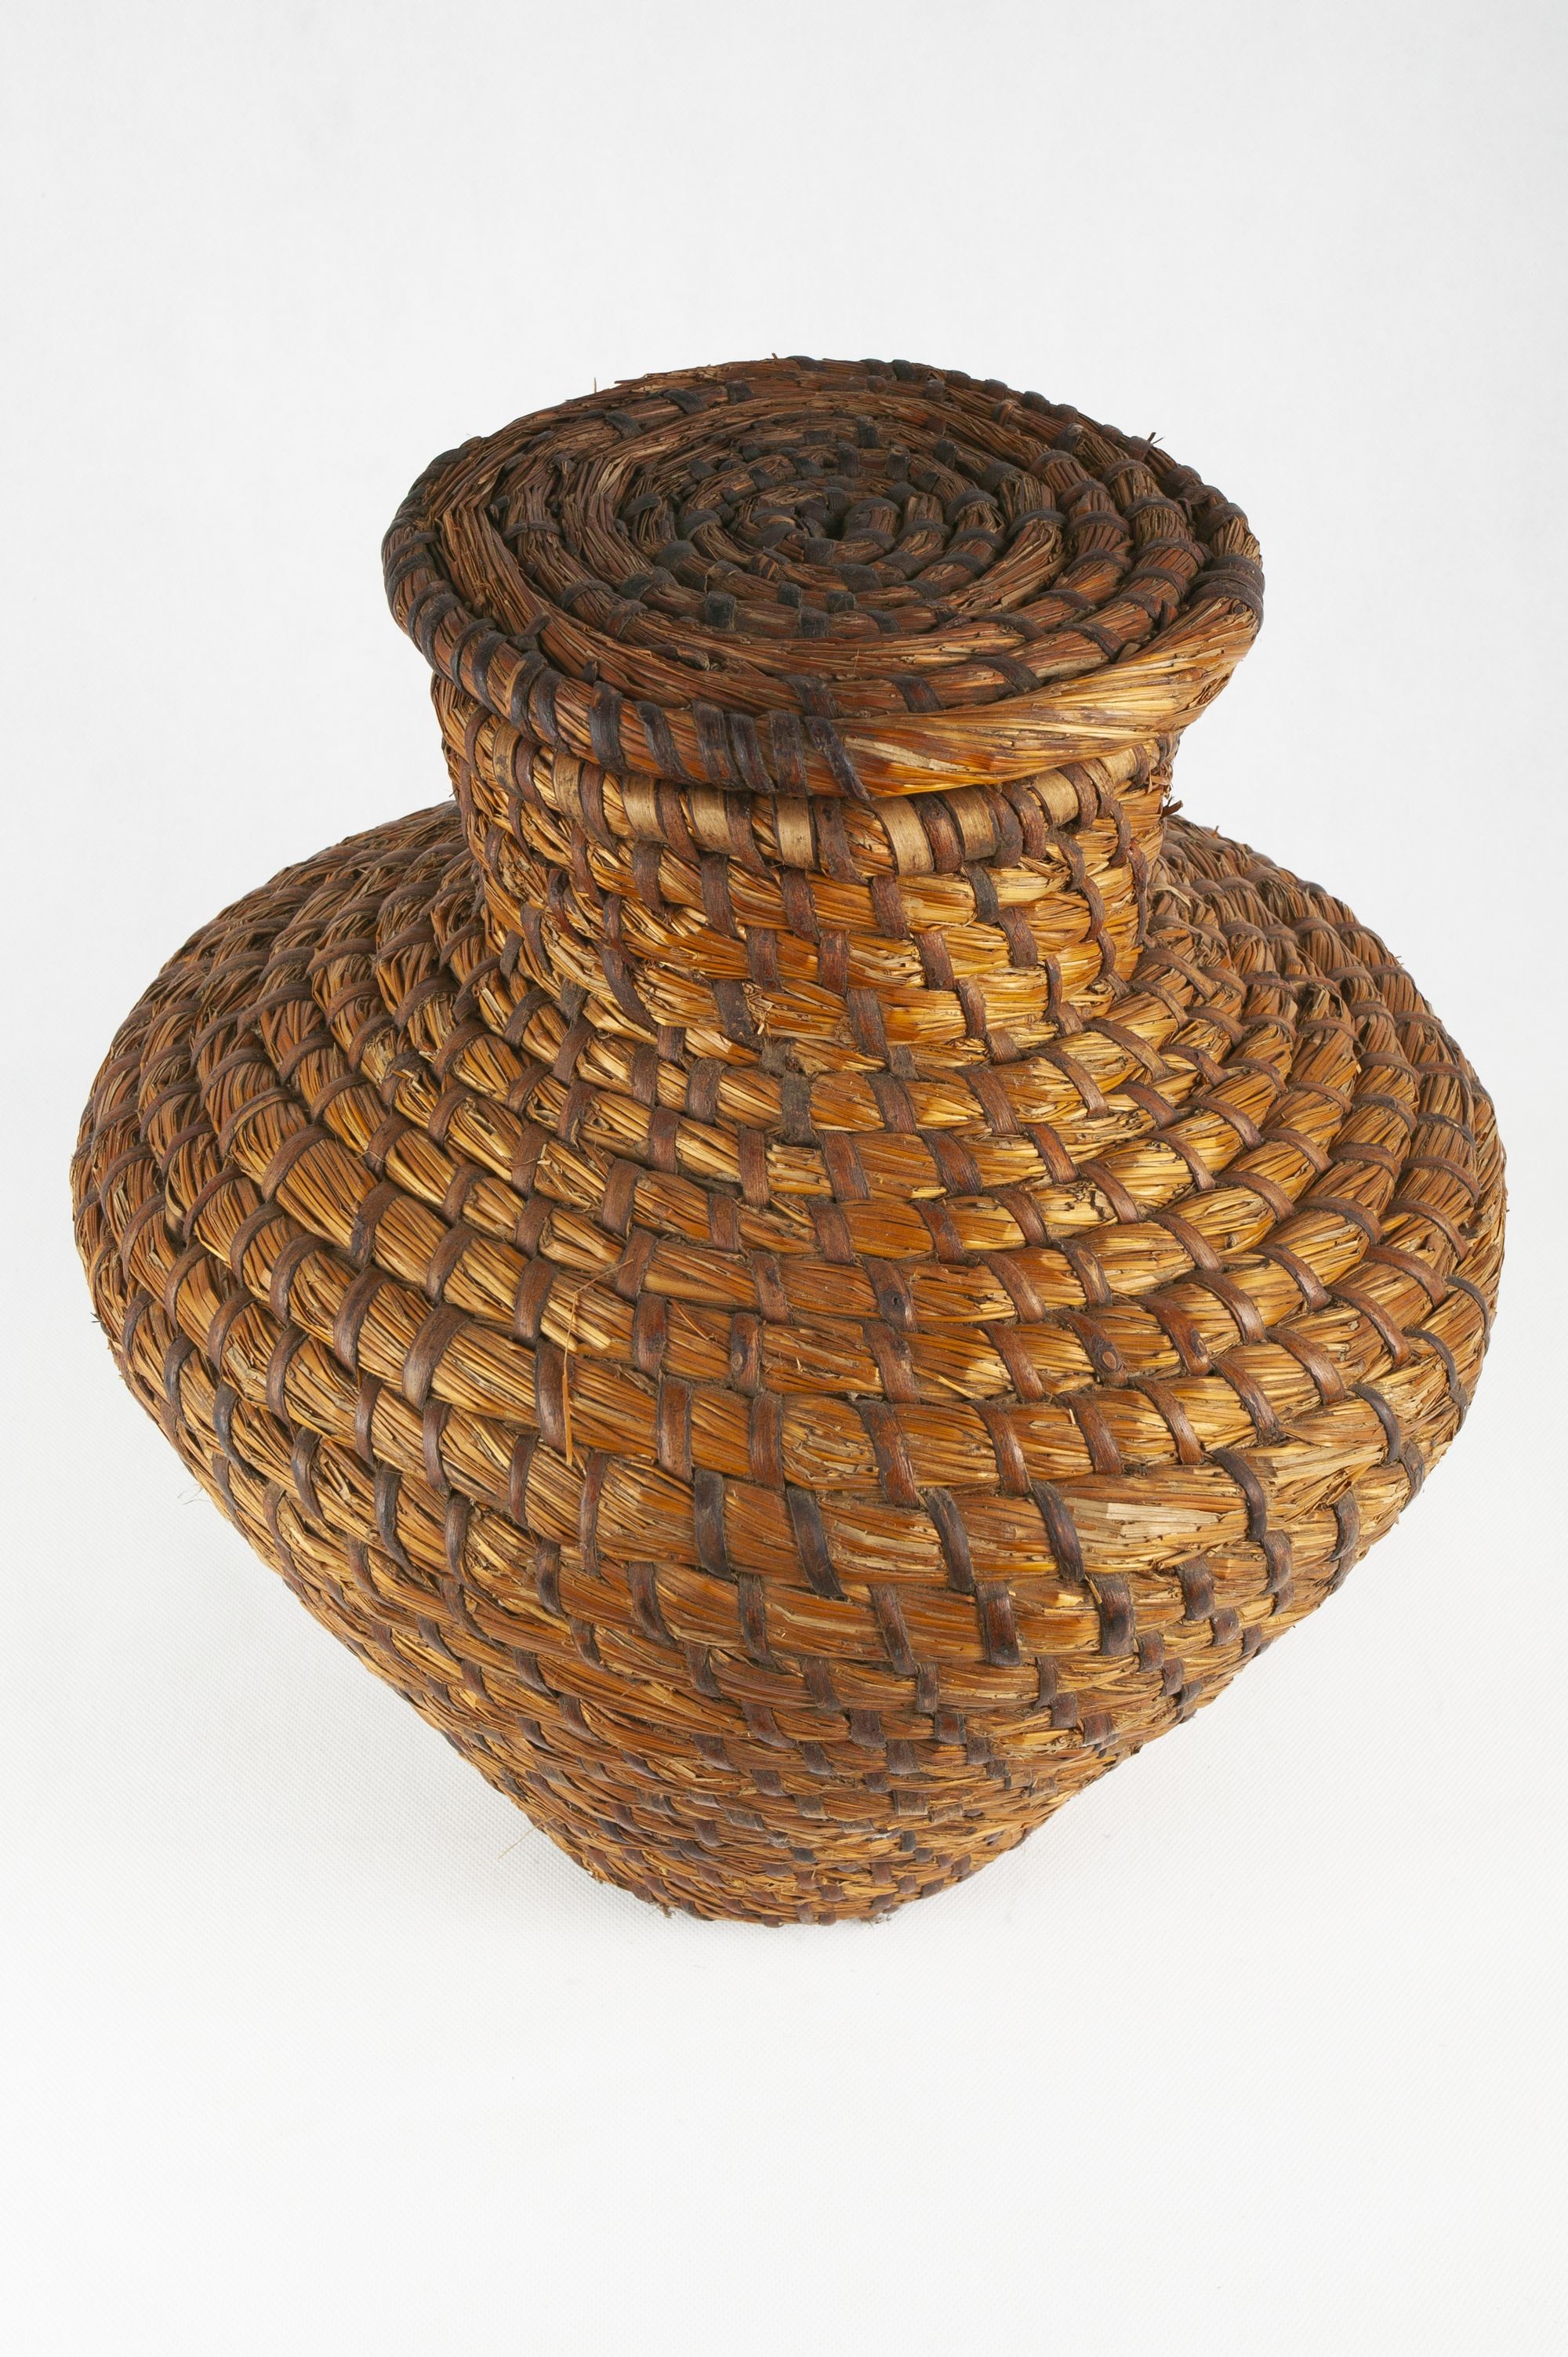 Babtartó edény "bucsér" (Rippl-Rónai Múzeum CC BY-NC-ND)